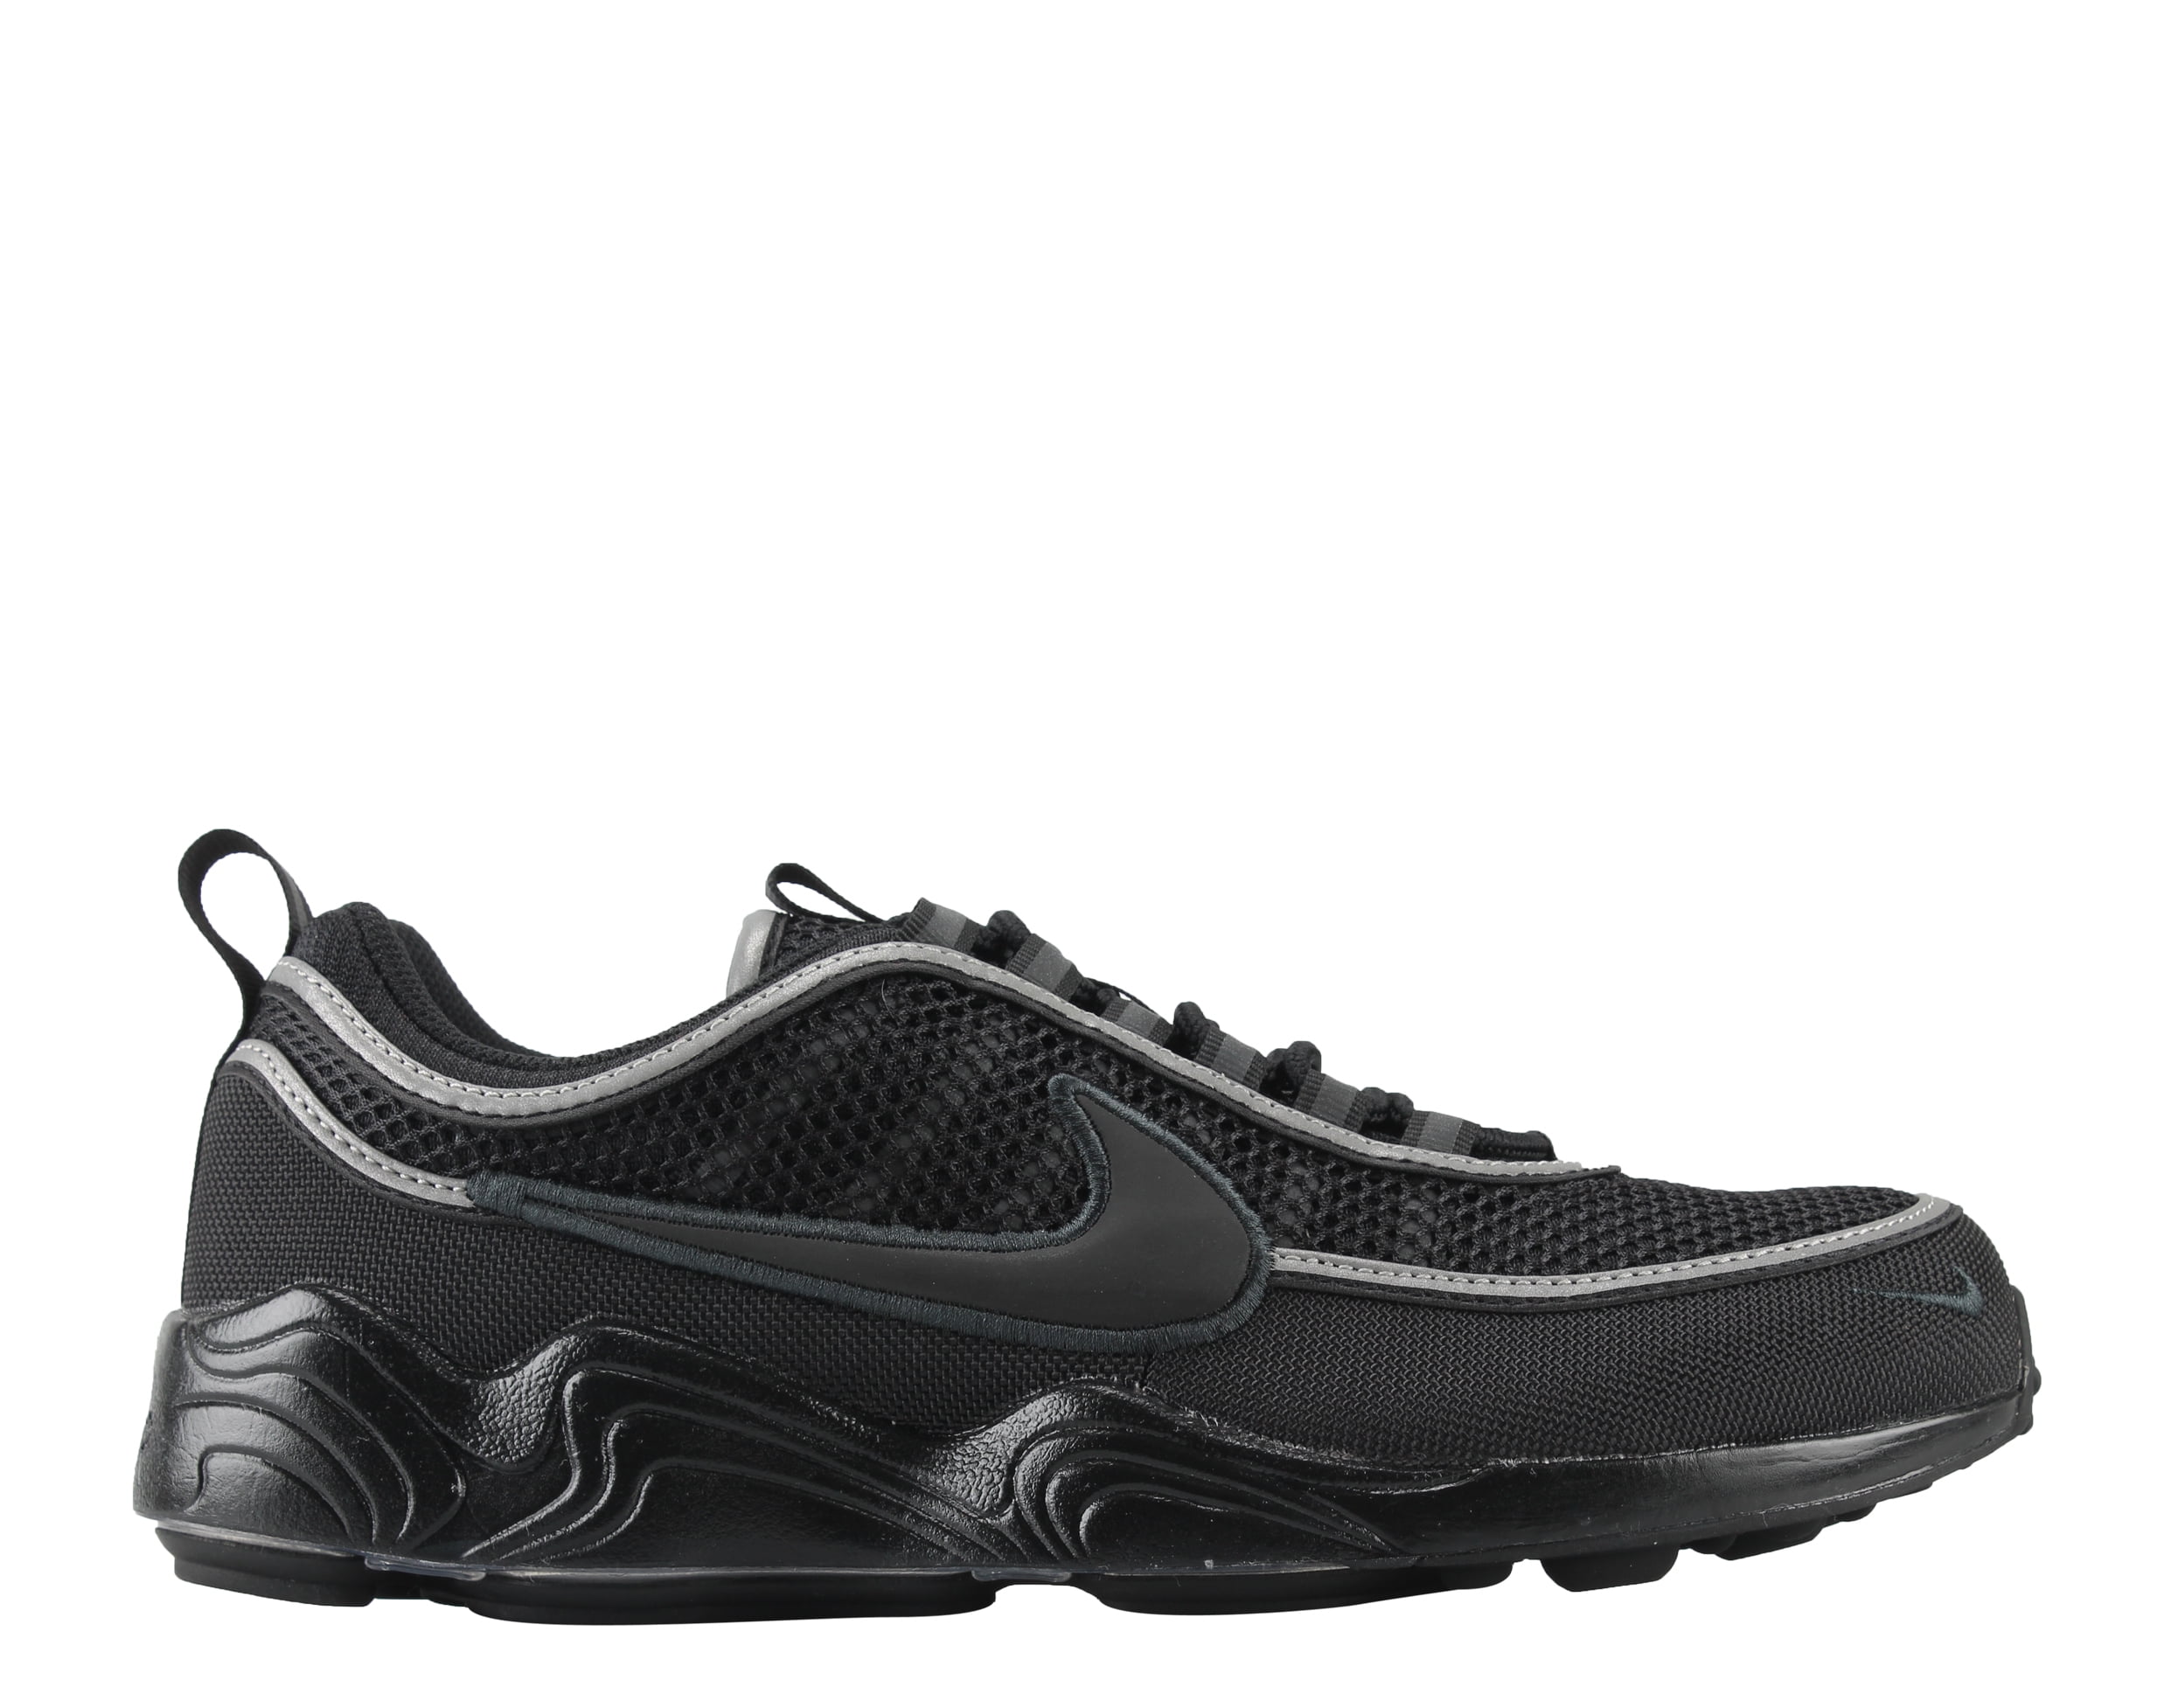 føle Far rapport Nike Air Zoom Spiridon '16 Black/Black-Anthracite 926955-001 Men's Size 9.5  - Walmart.com